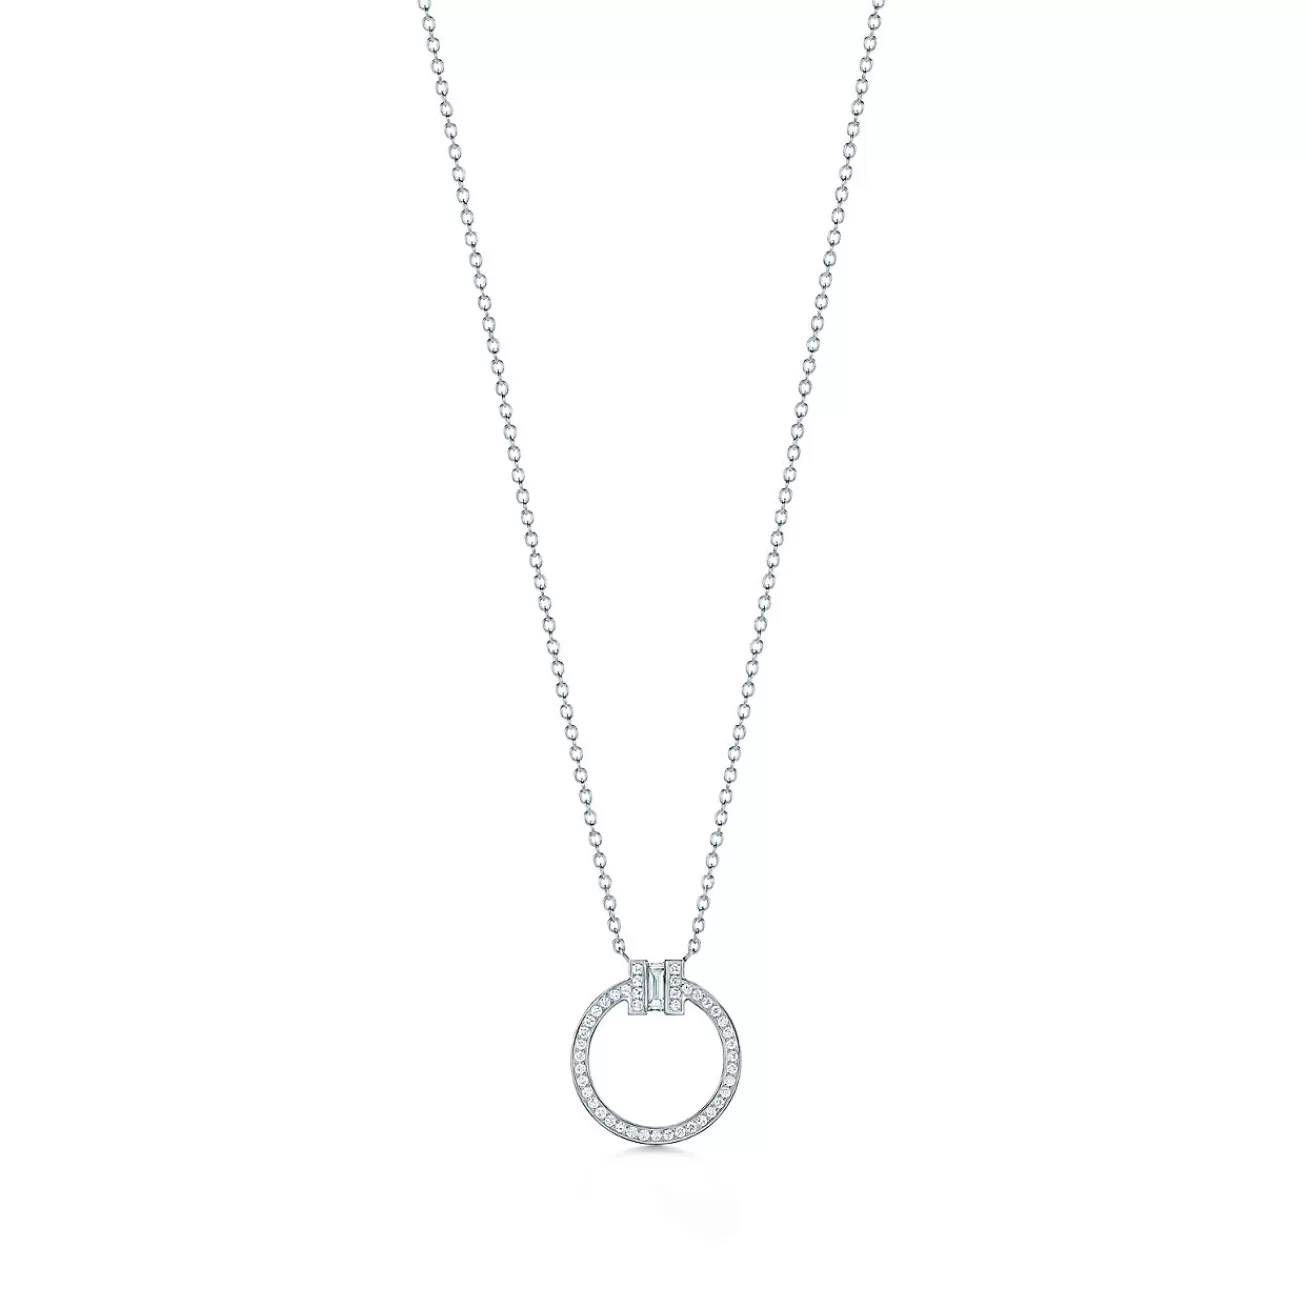 Tiffany & Co. Tiffany T diamond pendant in 18k white gold with a baguette diamond. | ^ Necklaces & Pendants | Diamond Jewelry